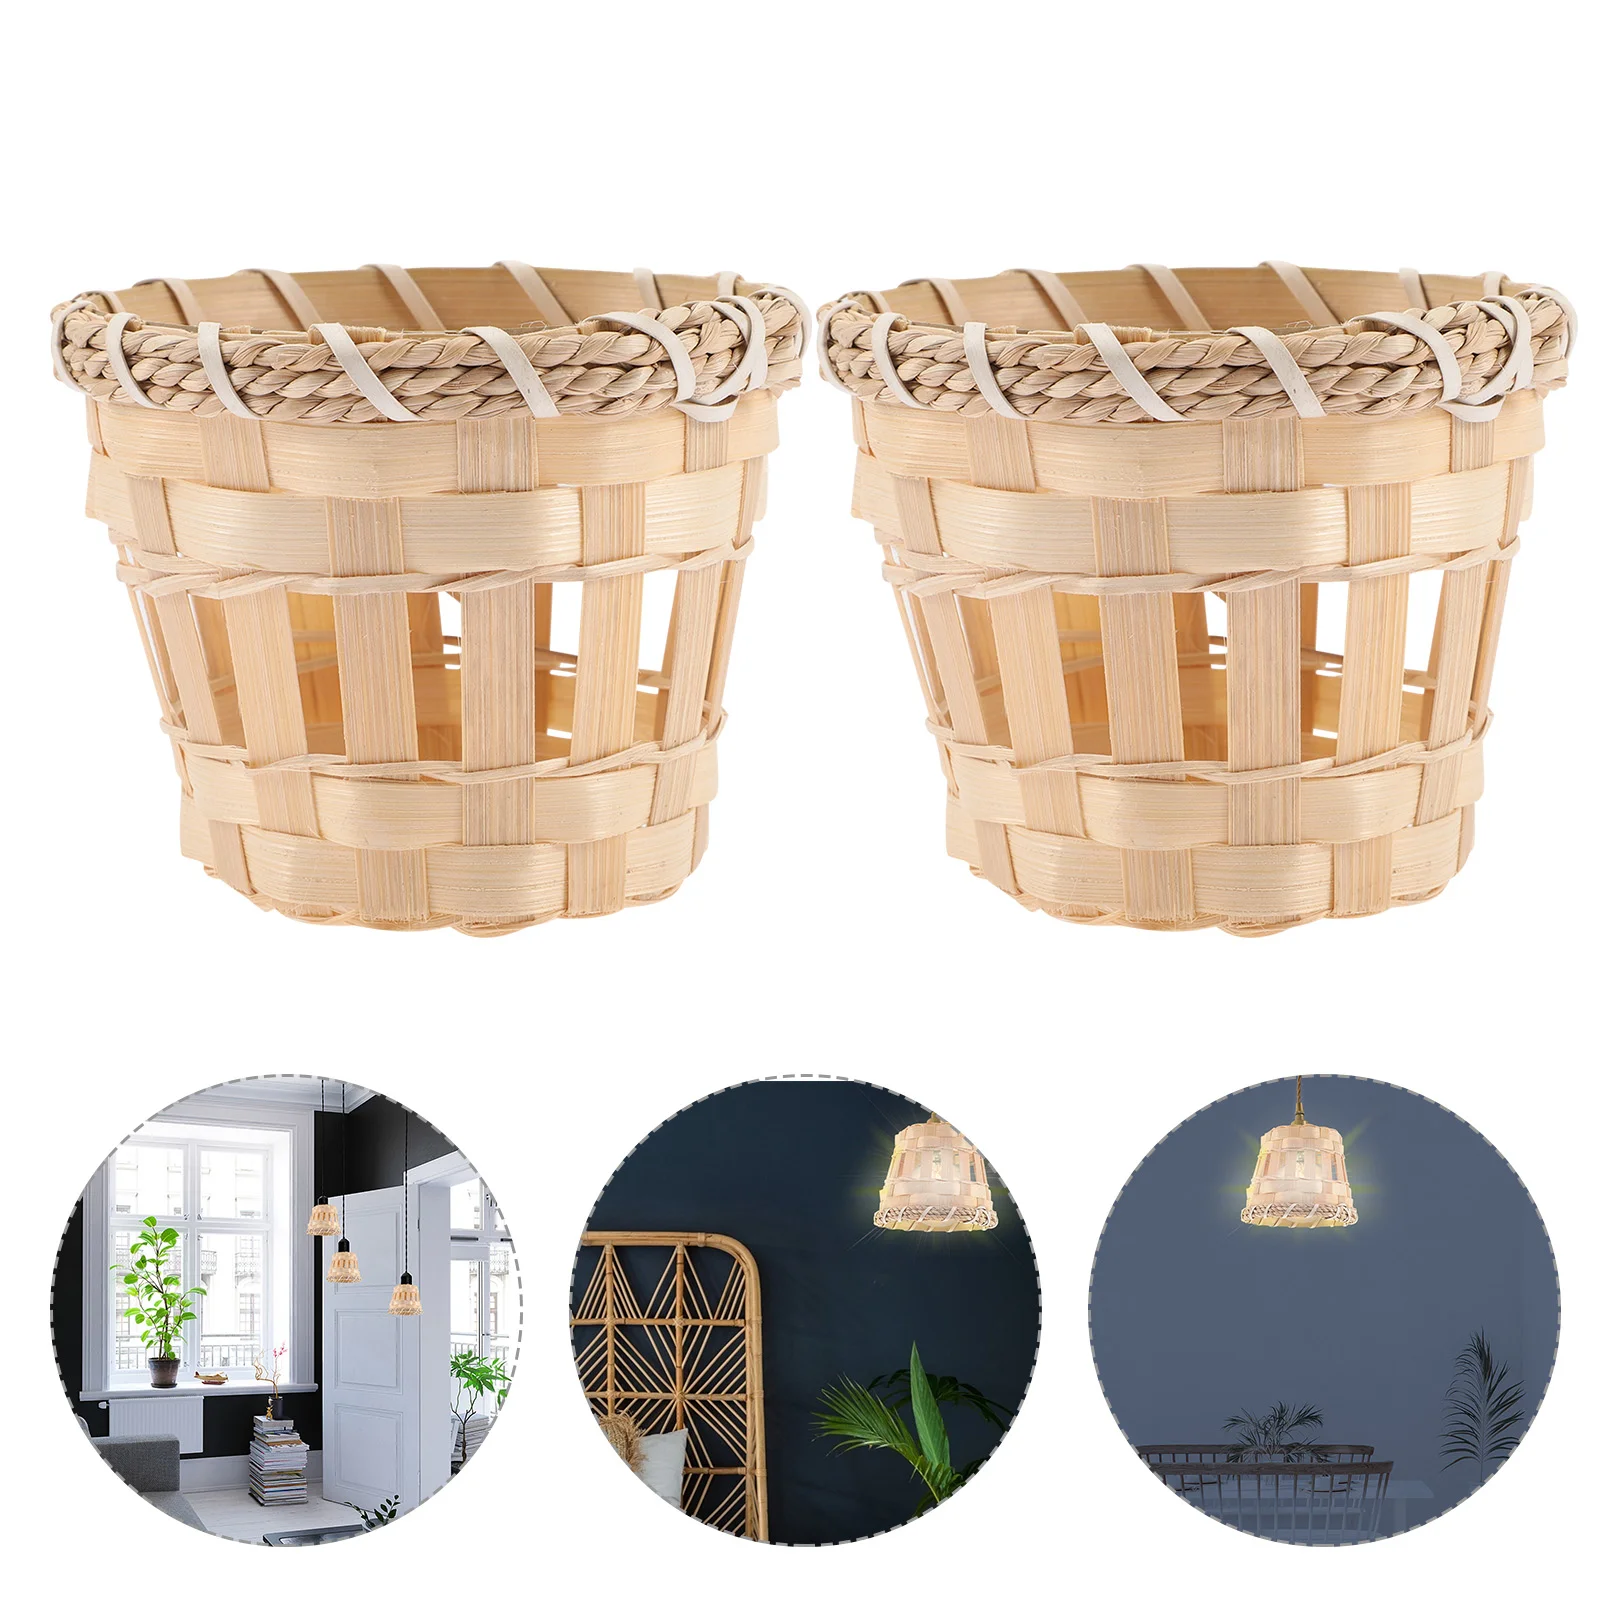 

4pcs Small Lamp Shade Barrel Lamp Shade Weaving Bamboo Ceiling Lamp Shade Cover